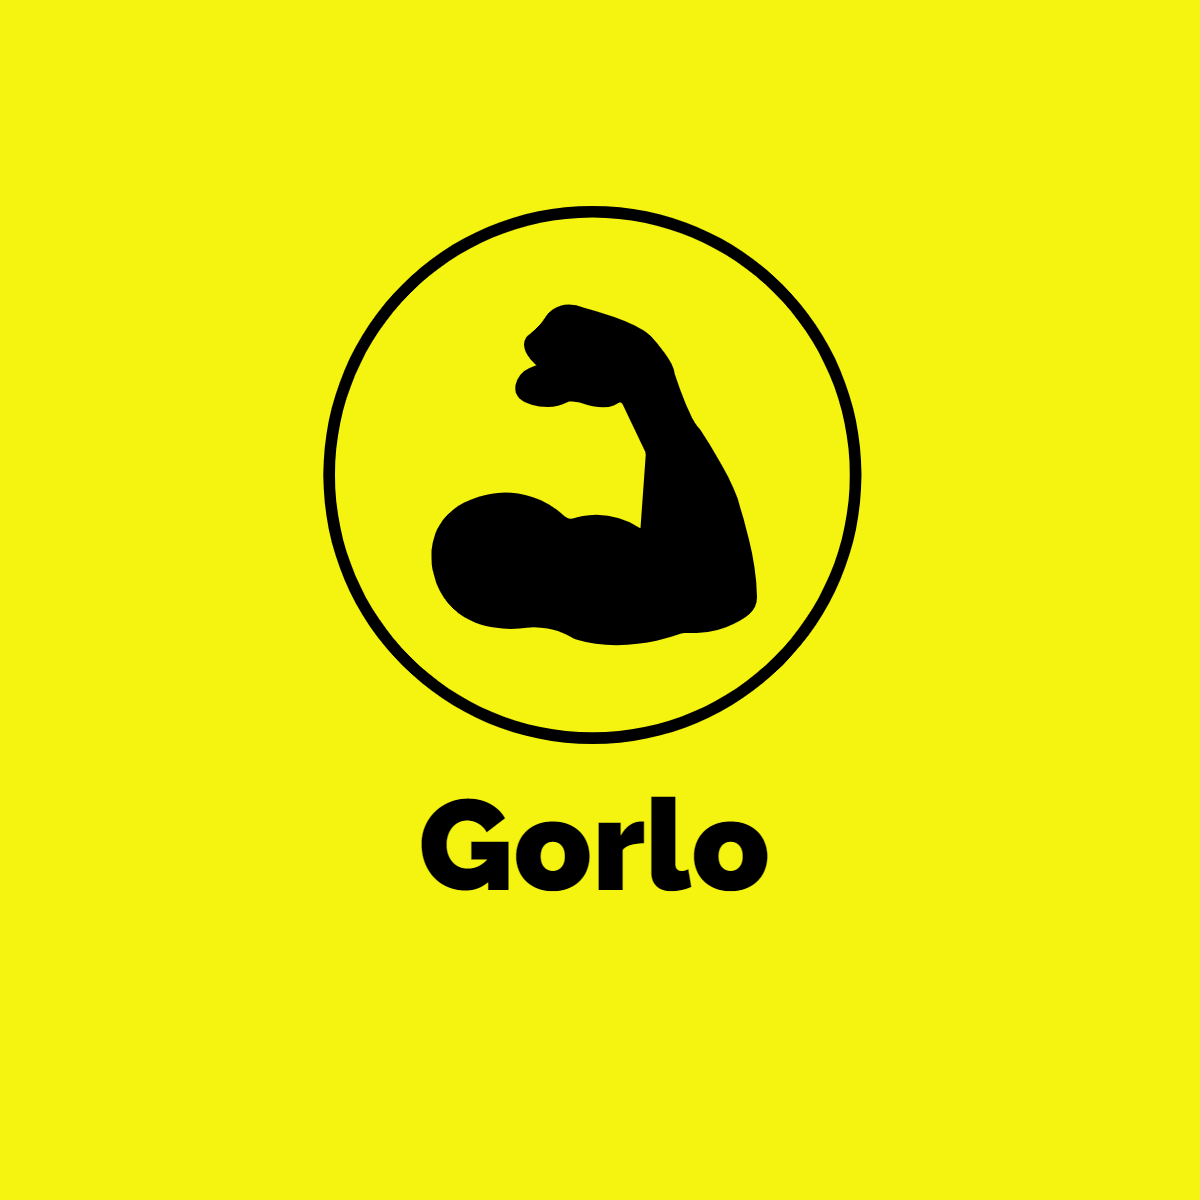 GORL - Gorlo